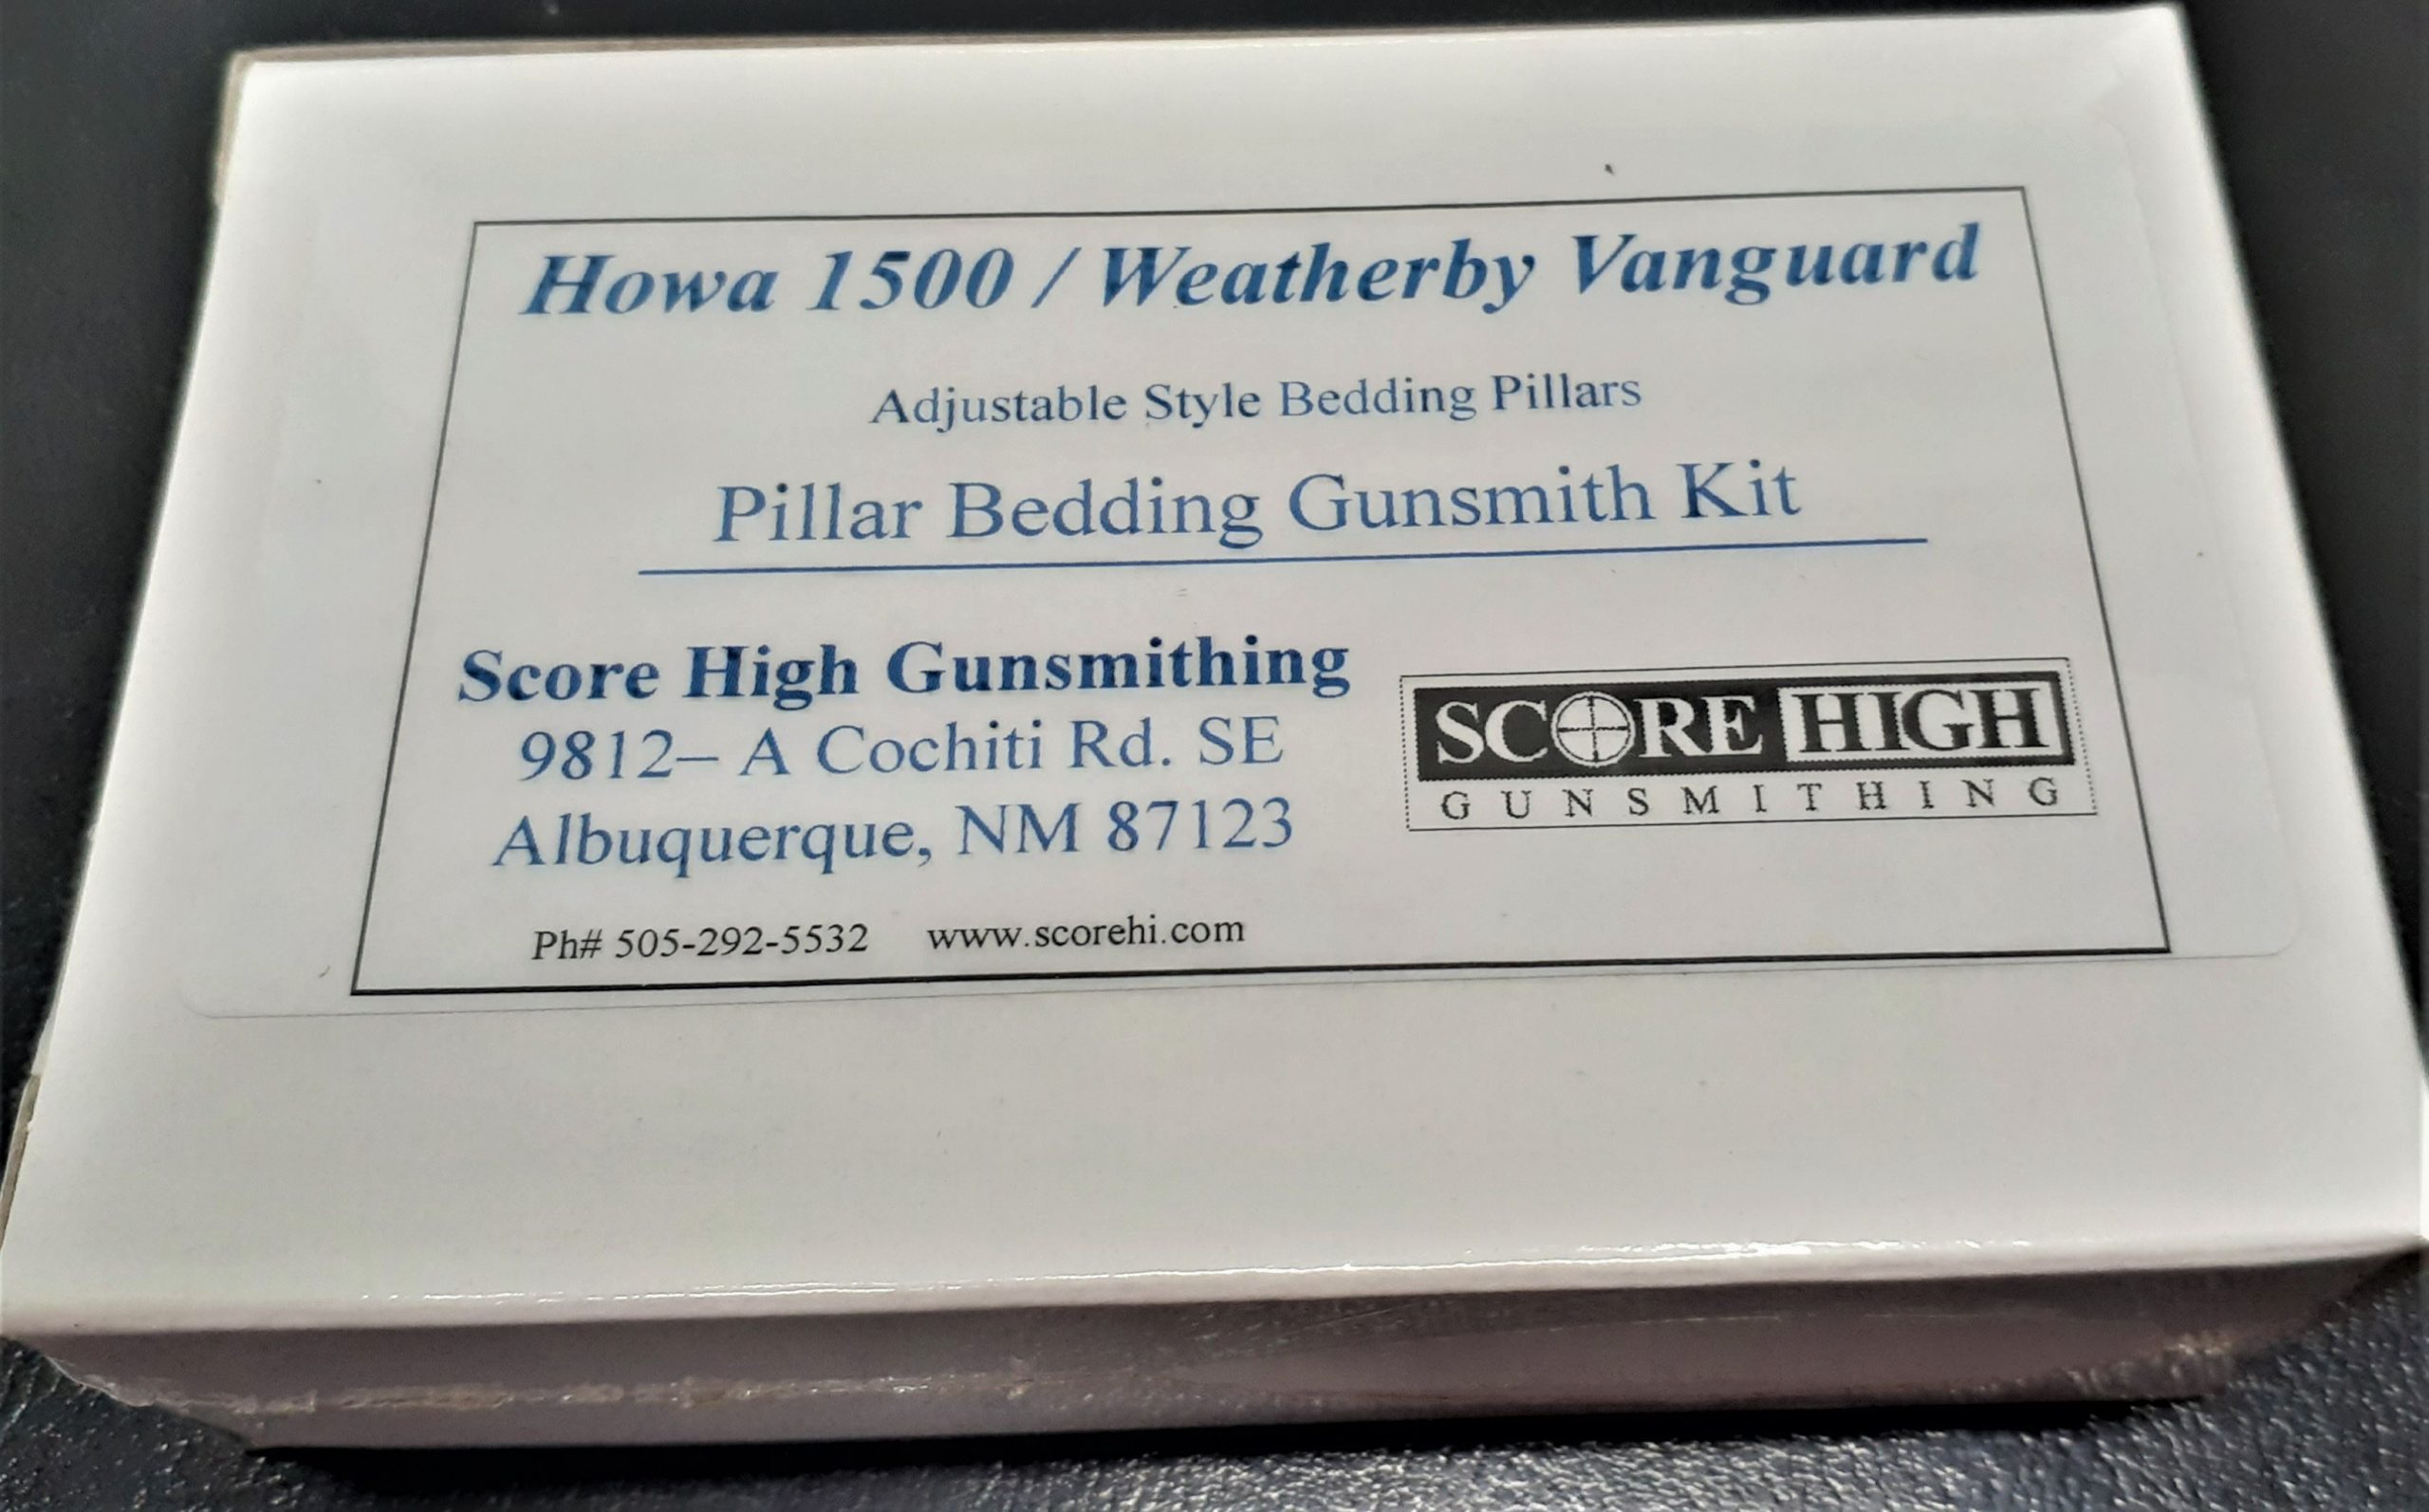 Score-High Pillar Glass Bedding Kit Howa 1500 Weatherby Vanguard SKU - 780928